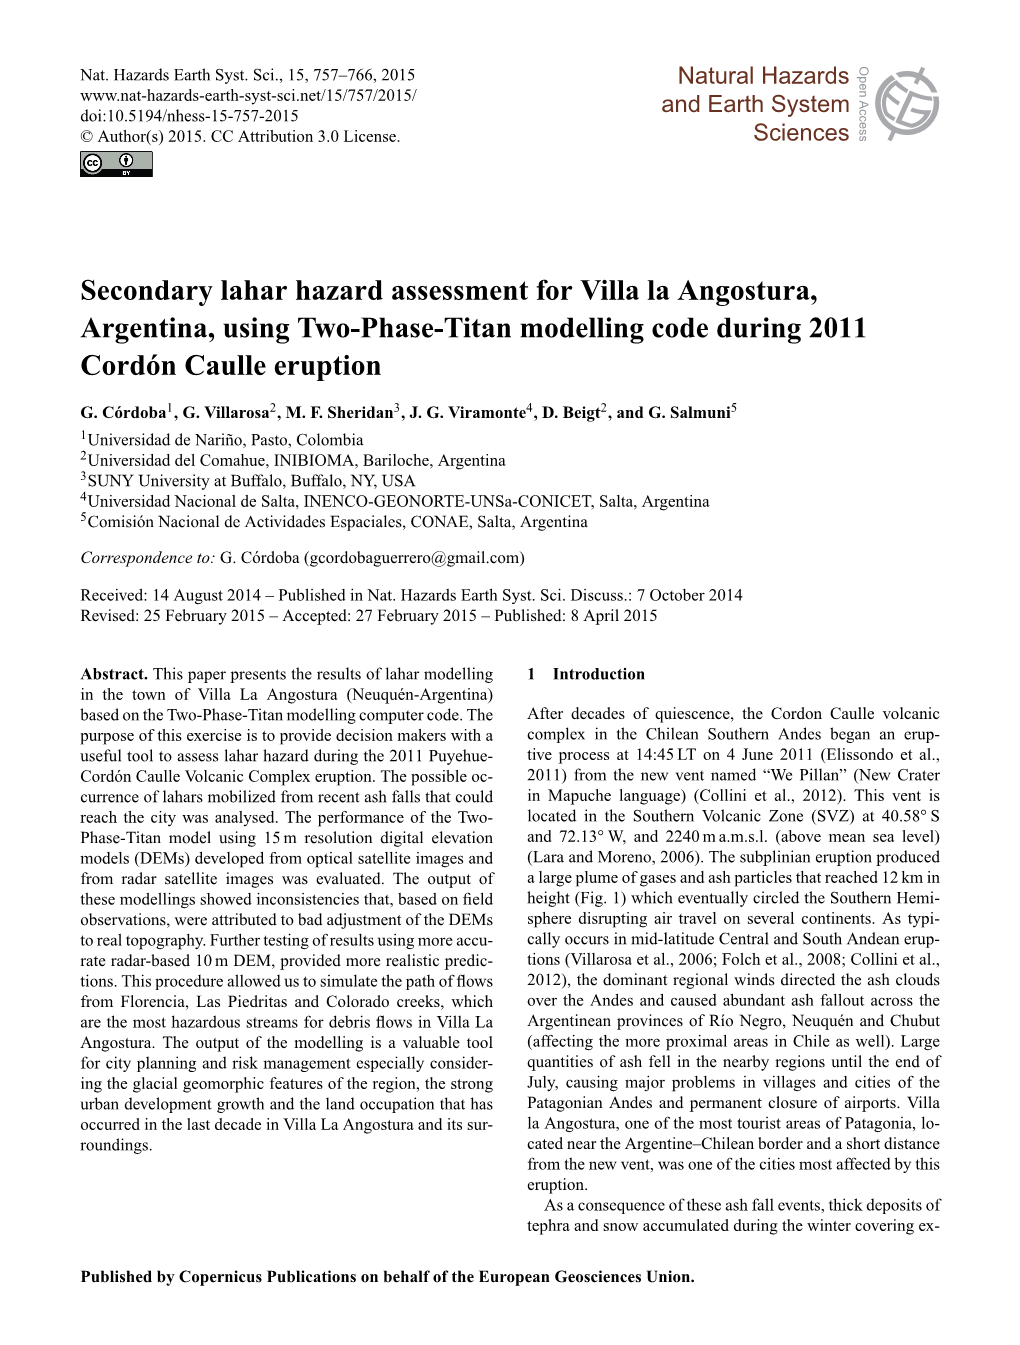 Secondary Lahar Hazard Assessment for Villa La Angostura, Argentina, Using Two-Phase-Titan Modelling Code During 2011 Cordón Caulle Eruption